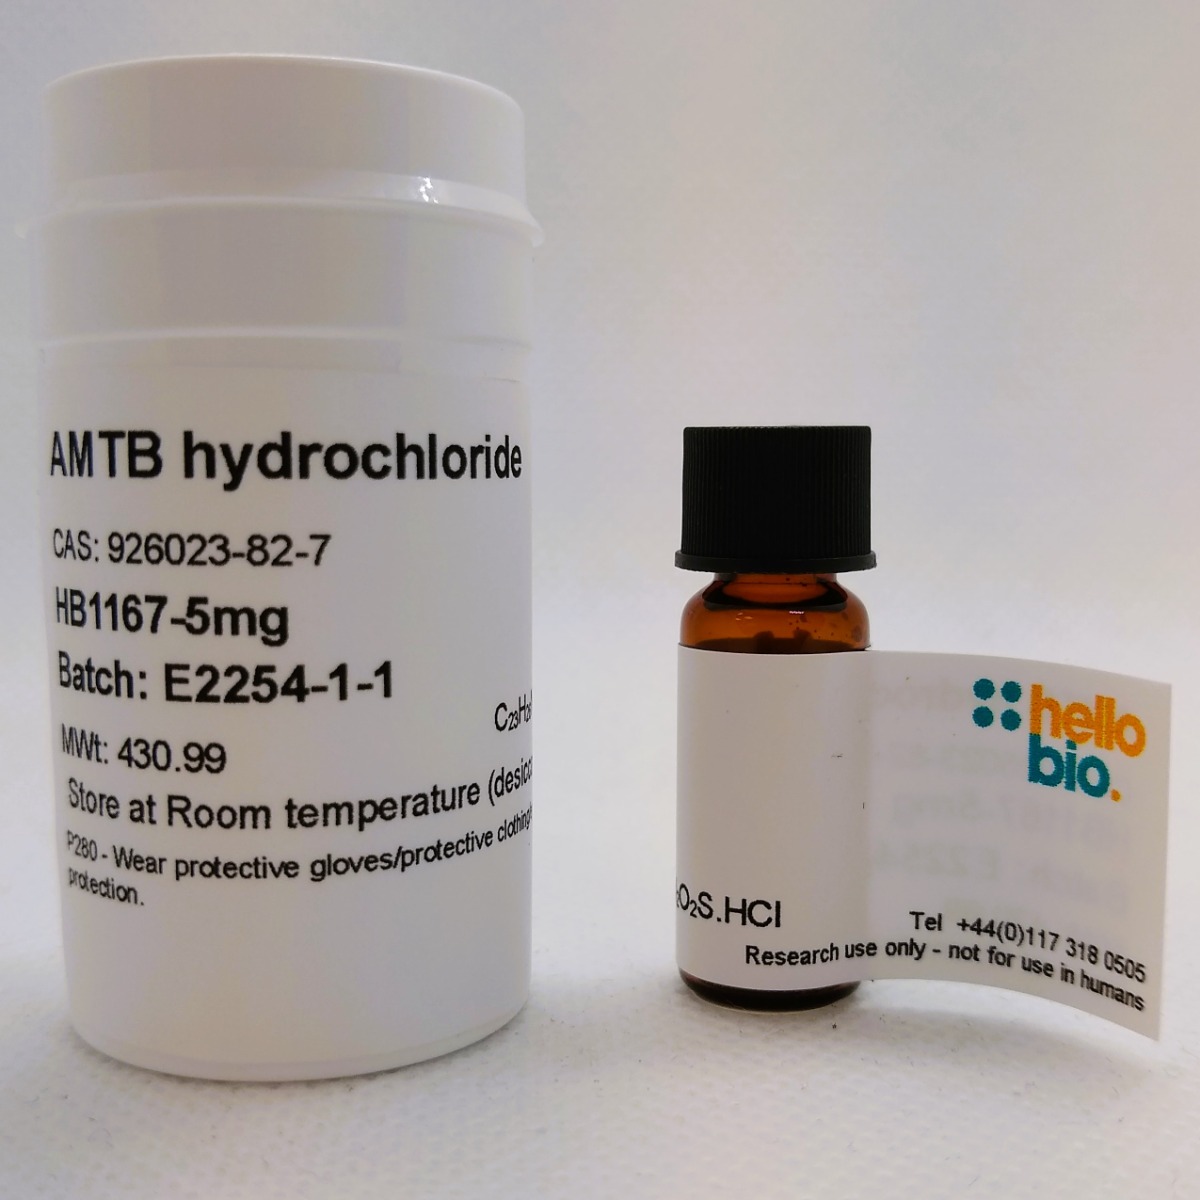 AMTB hydrochloride product vial image | Hello Bio